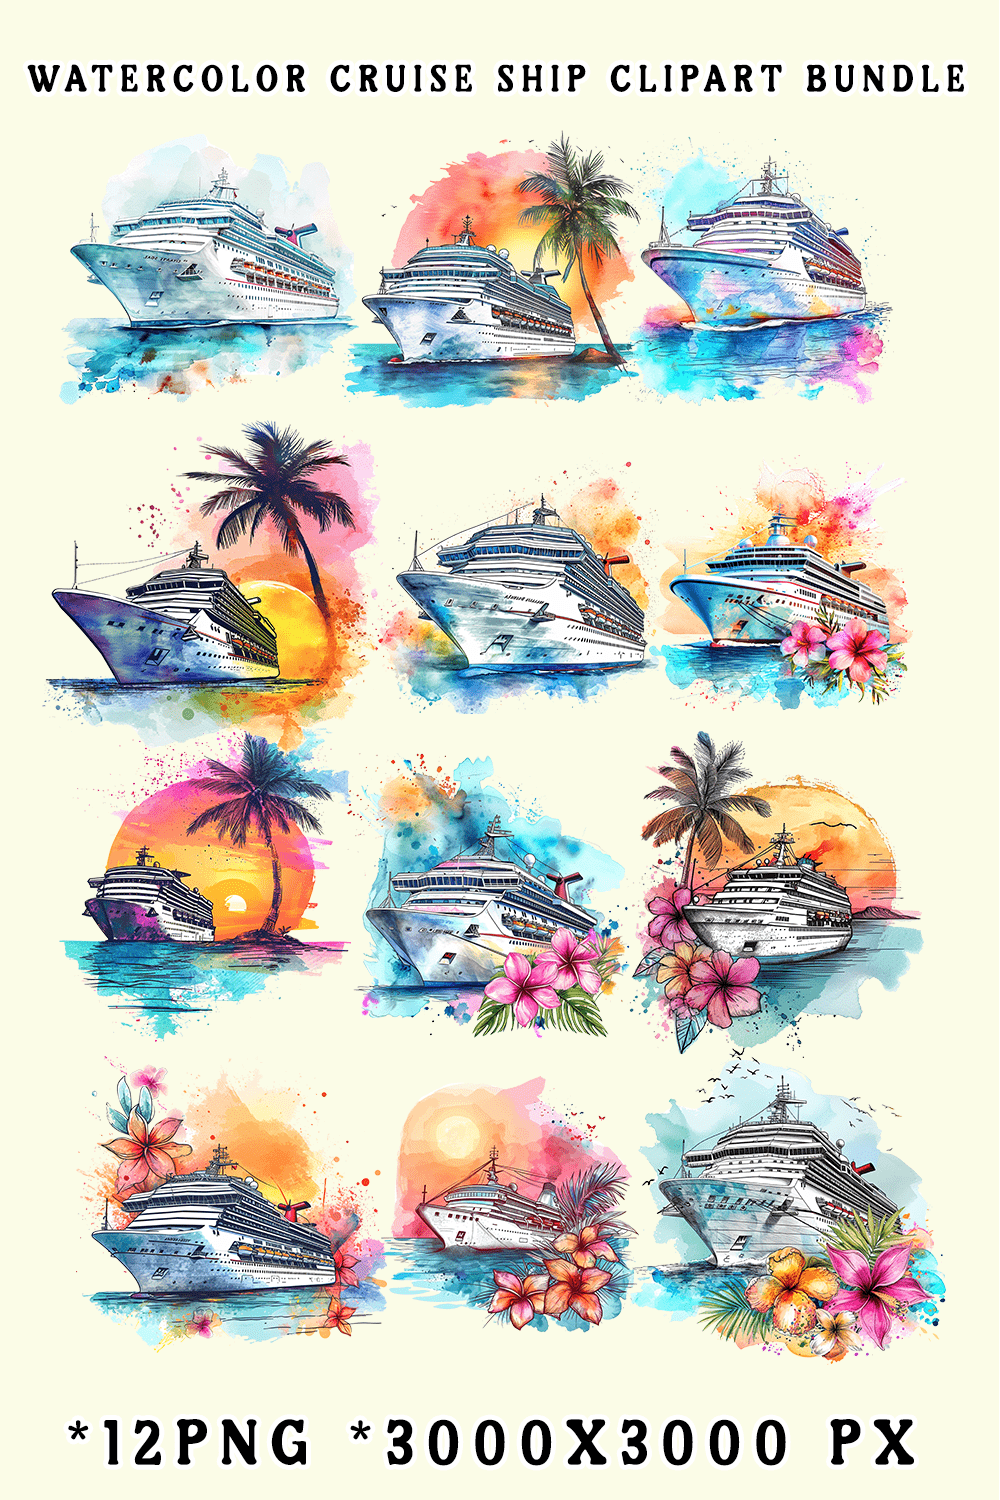 Watercolor Cruise Ship Clipart Bundle pinterest preview image.